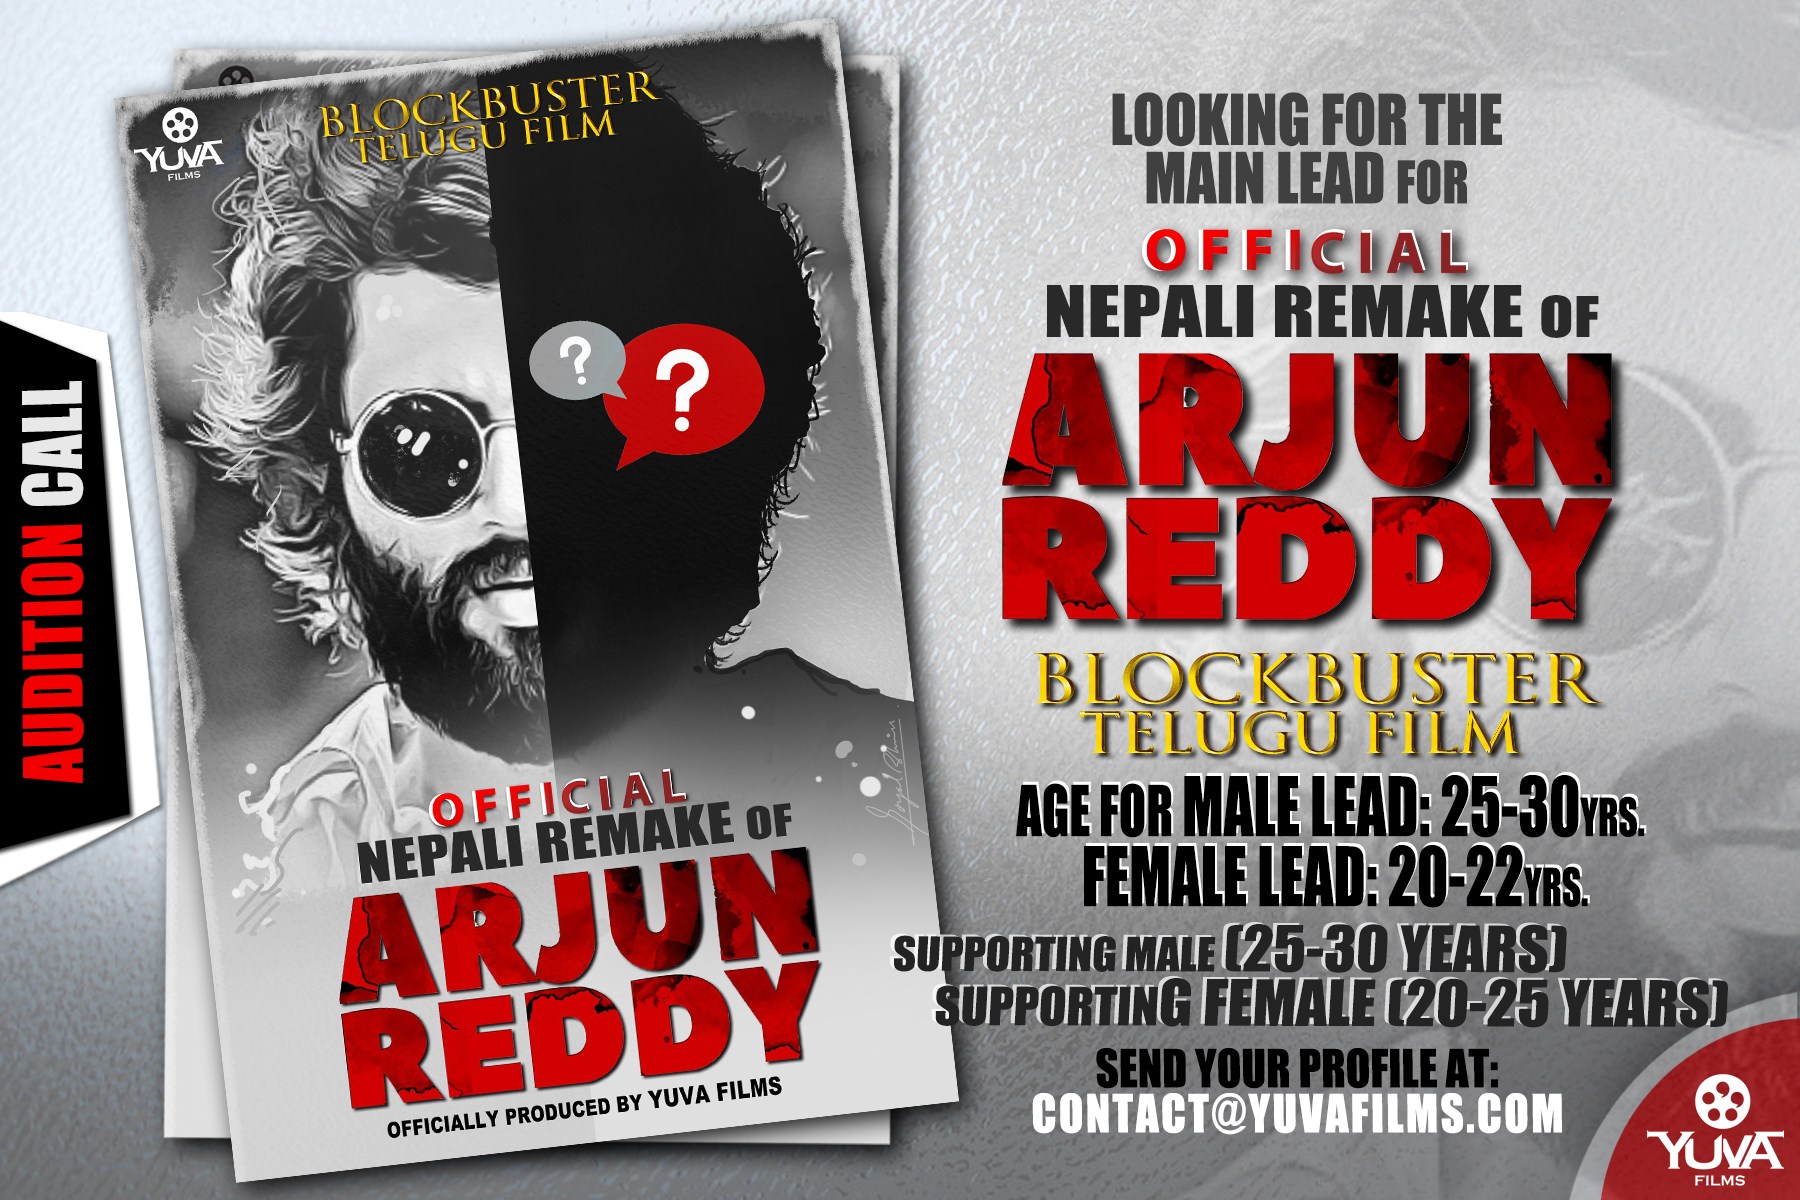 Producer looking for artist of Nepali version of ‘Arjun Reddy’